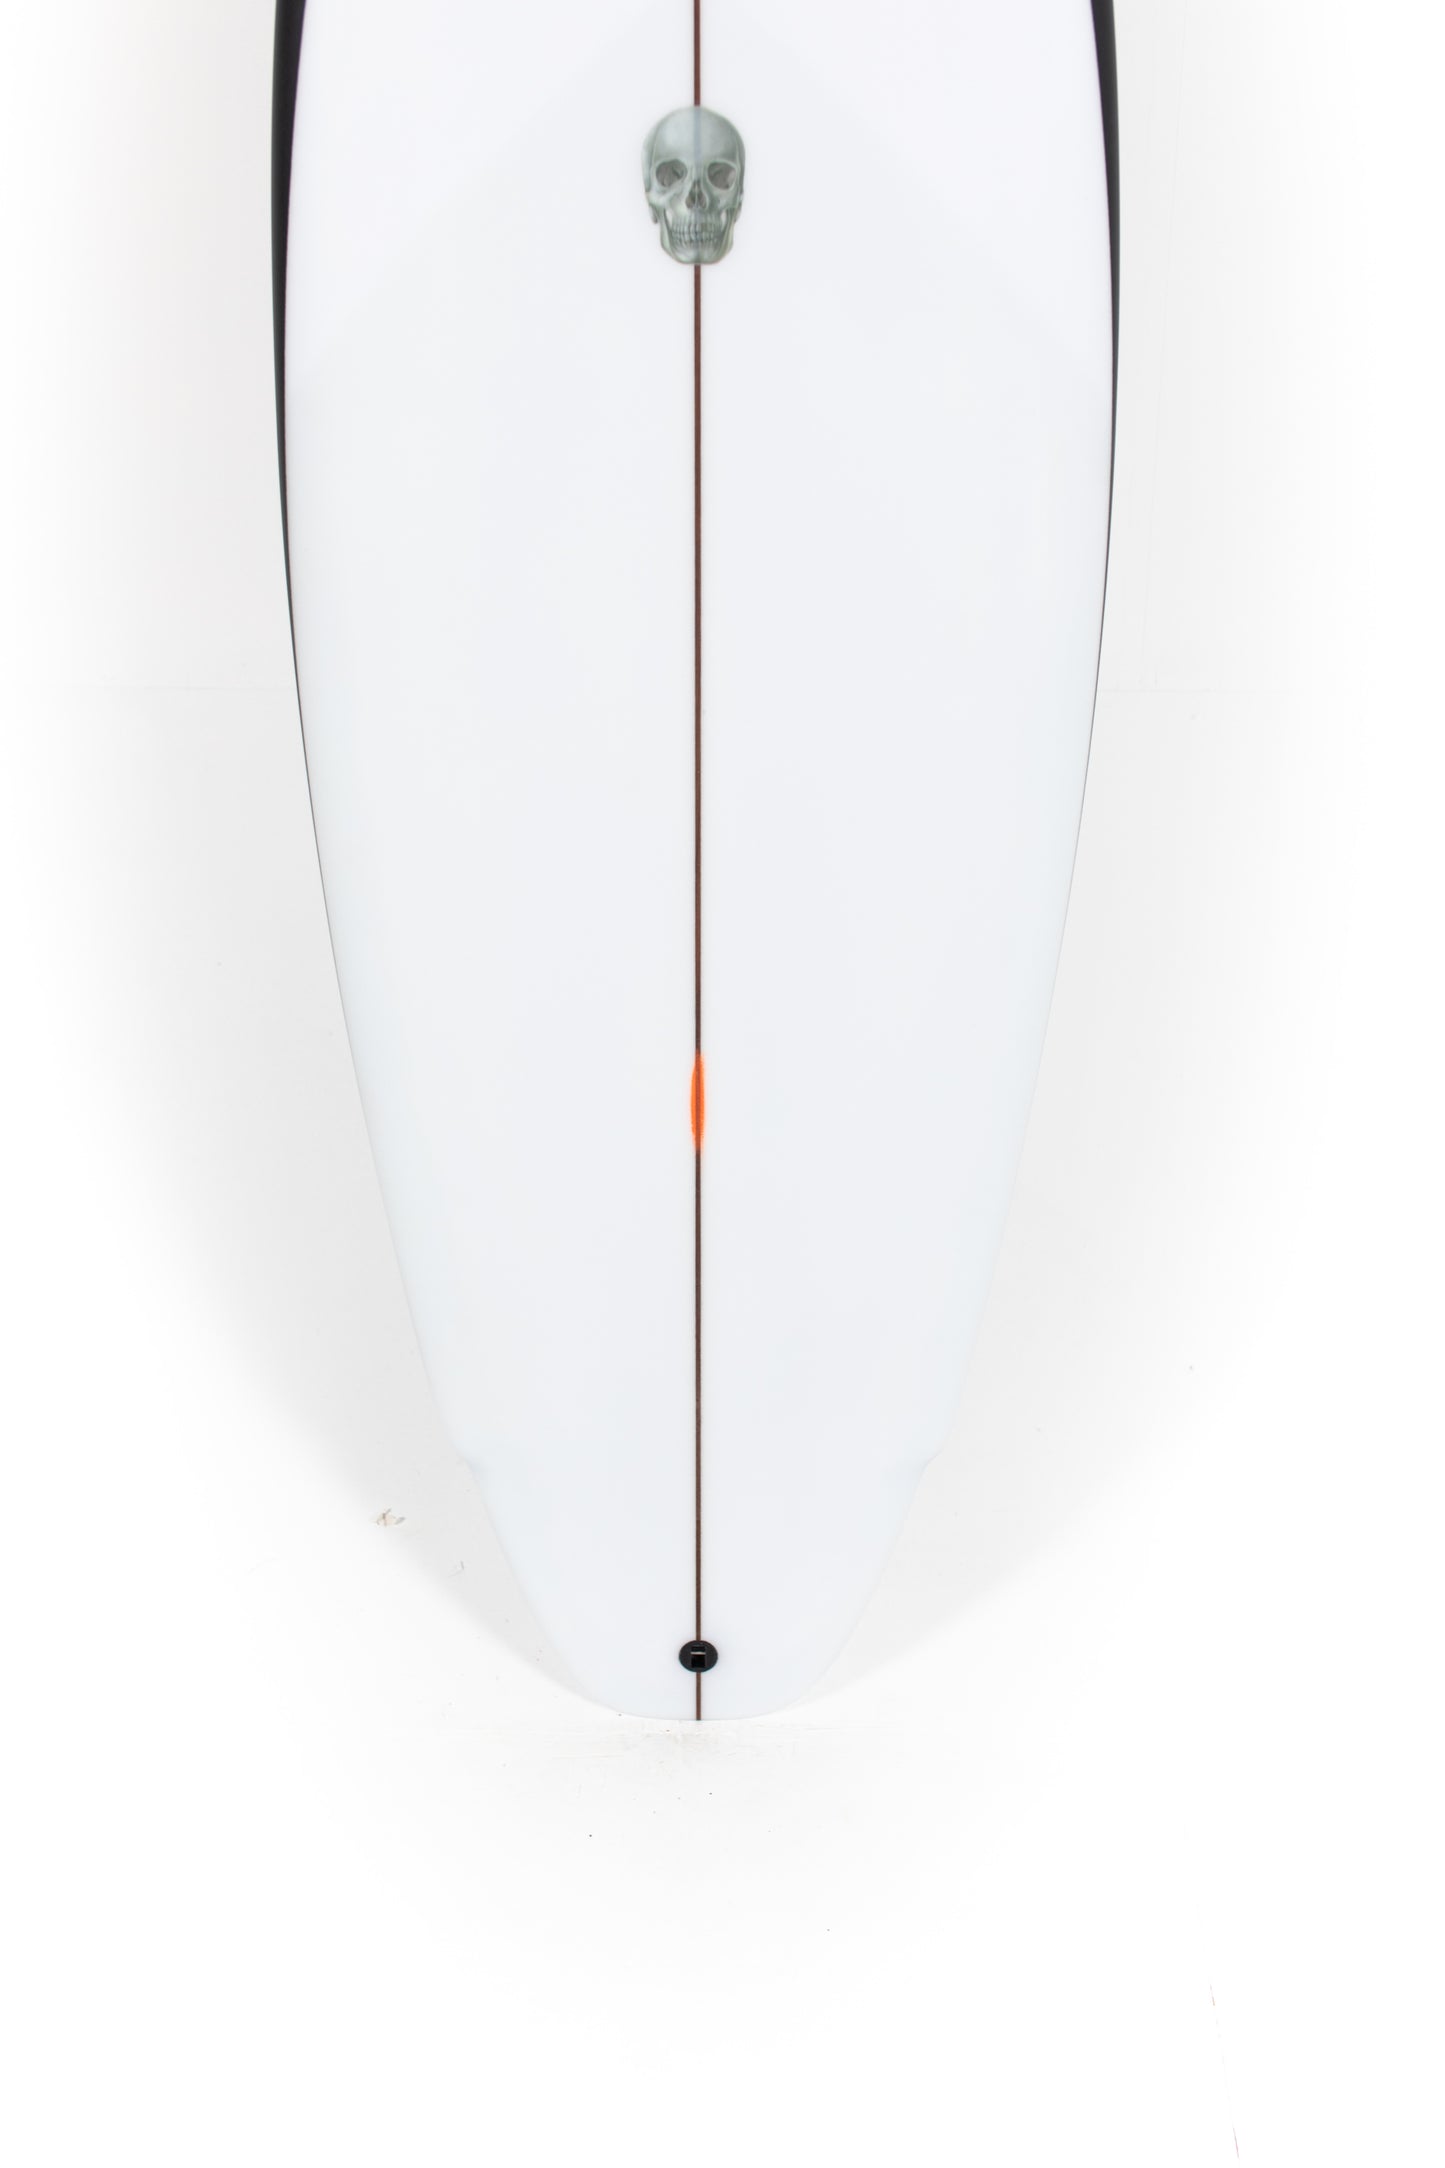 
                  
                    Pukas Surf Shop - Christenson Surfboards - LANE SPLITTER - 5'4" x 19 3/8 x 2 5/16 - CX04564
                  
                